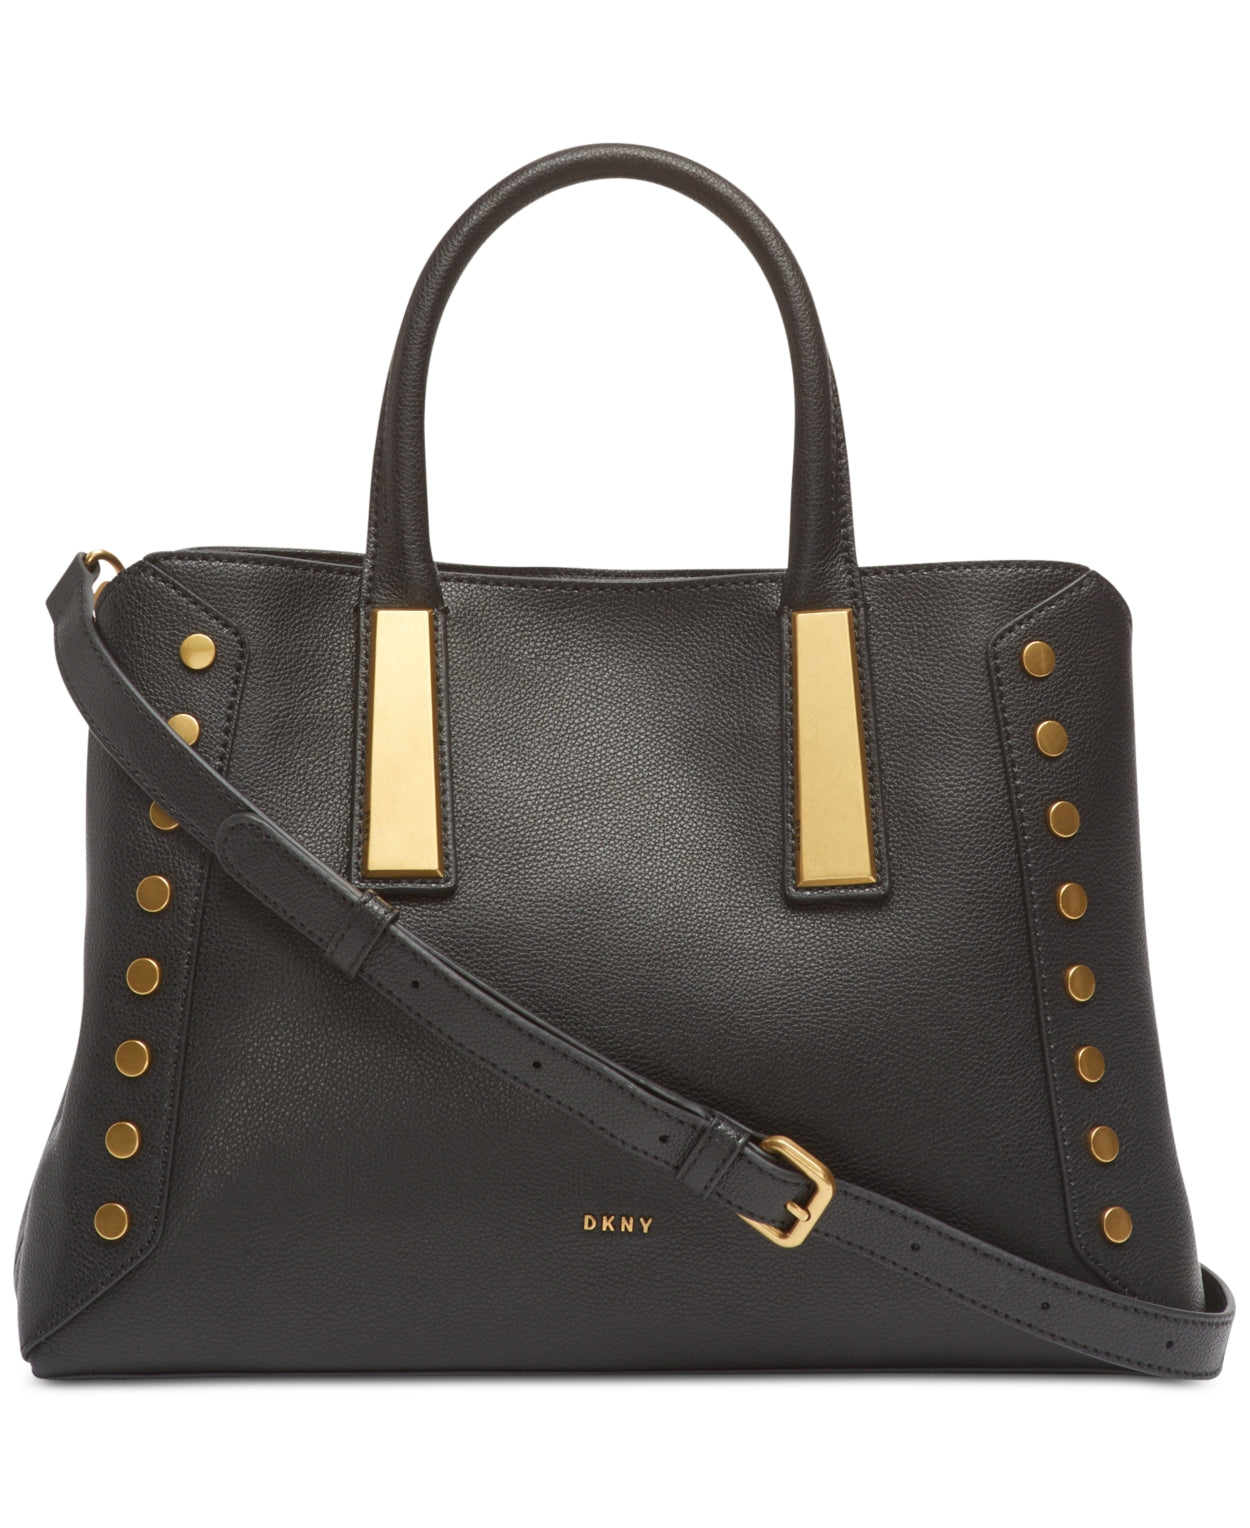 DKNY Womens Ewen Pebble Leather Satchel Handbag